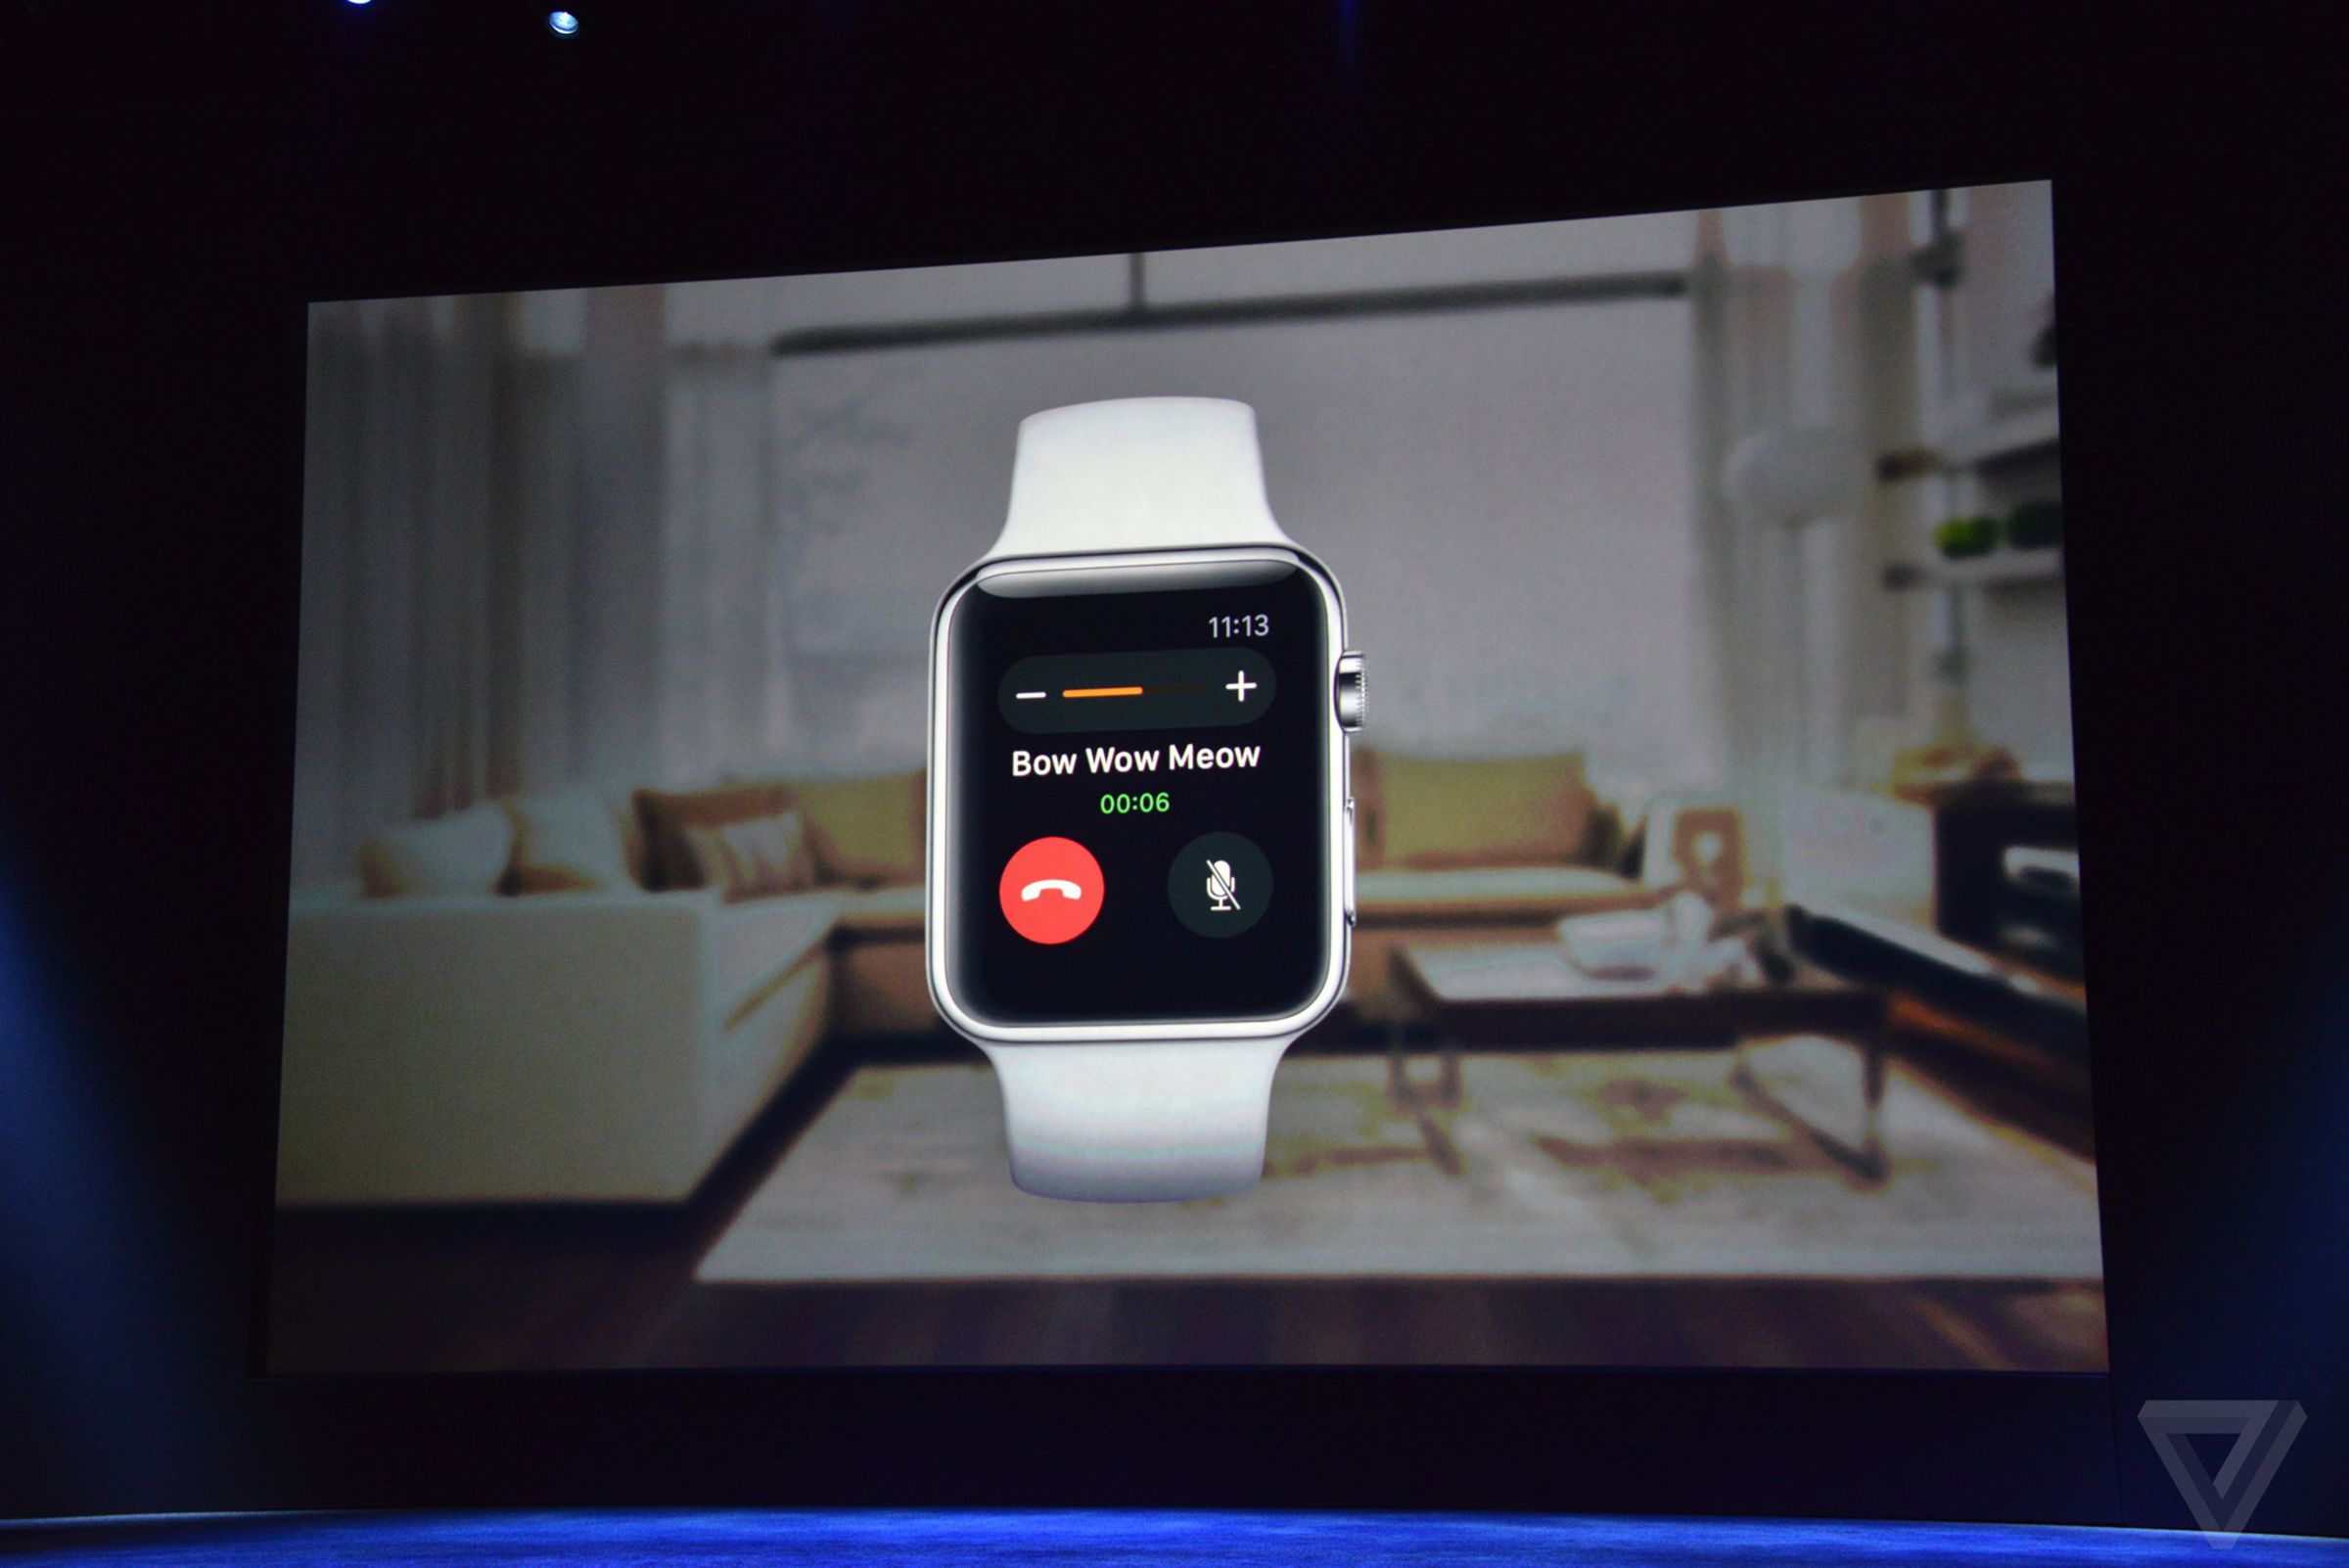 Apple Watch app pictures